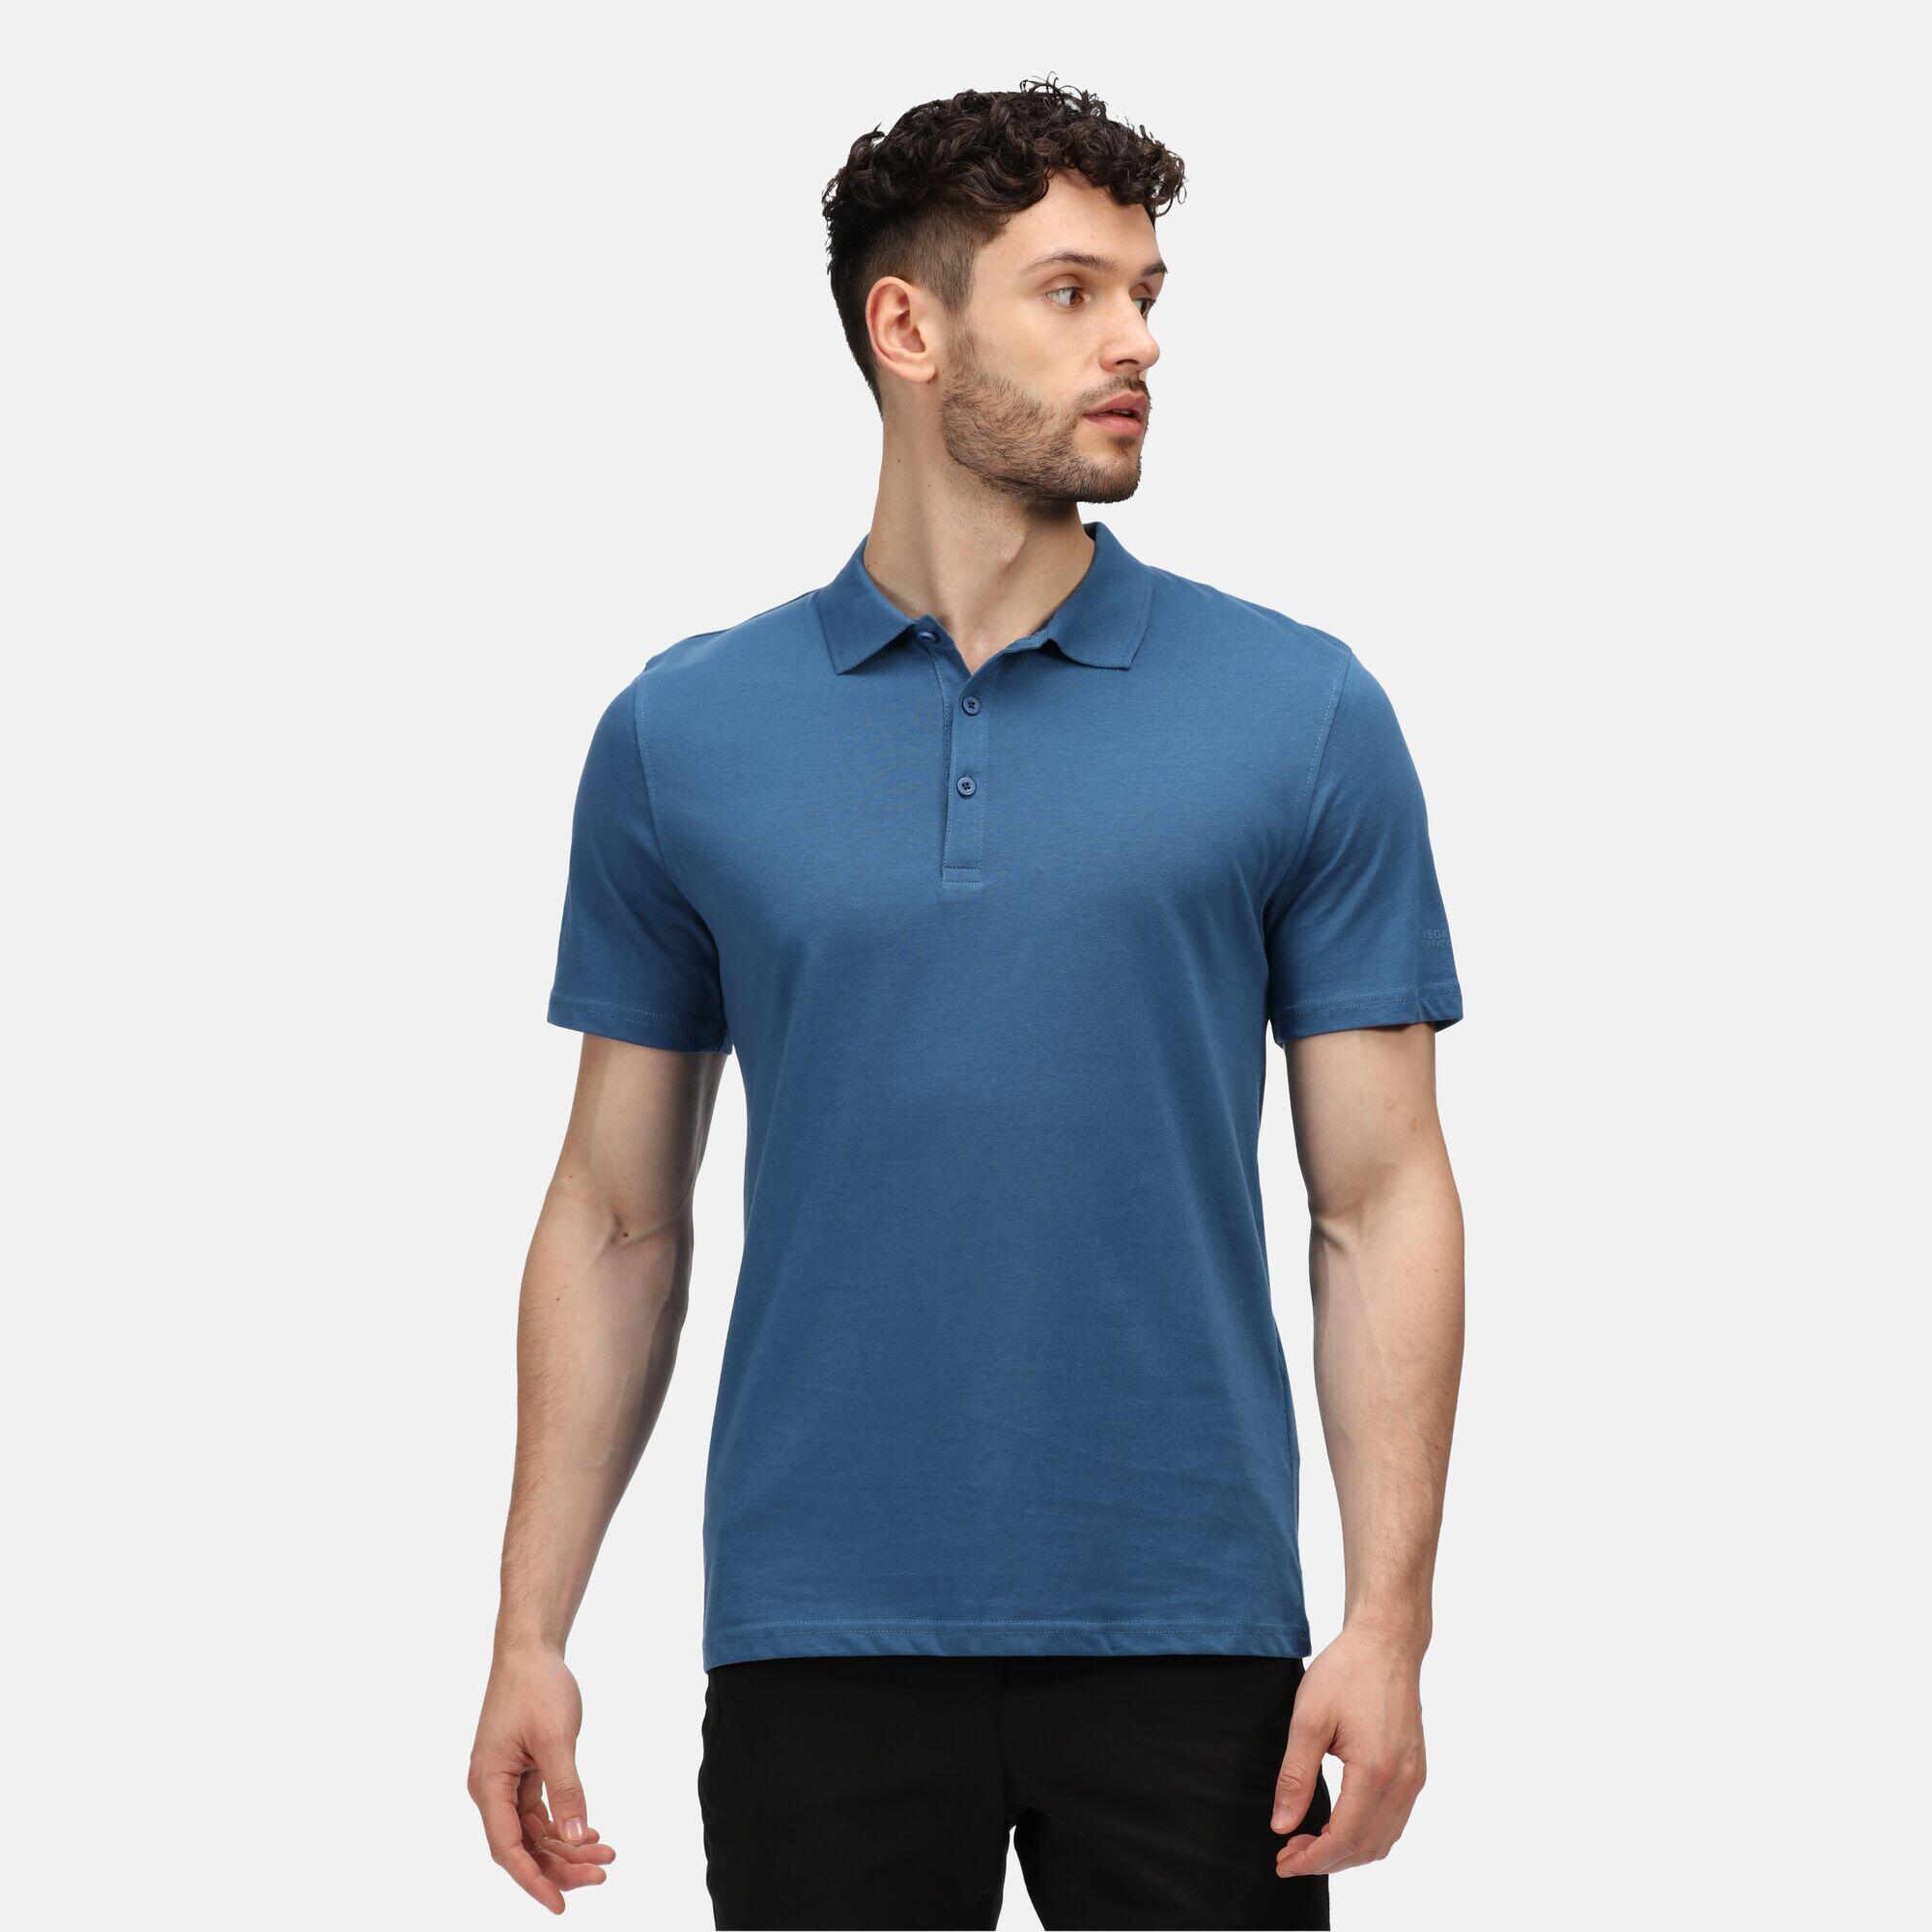 Sinton Men's Fitness Short Sleeve Polo Shirt - Dynasty Blue 1/5